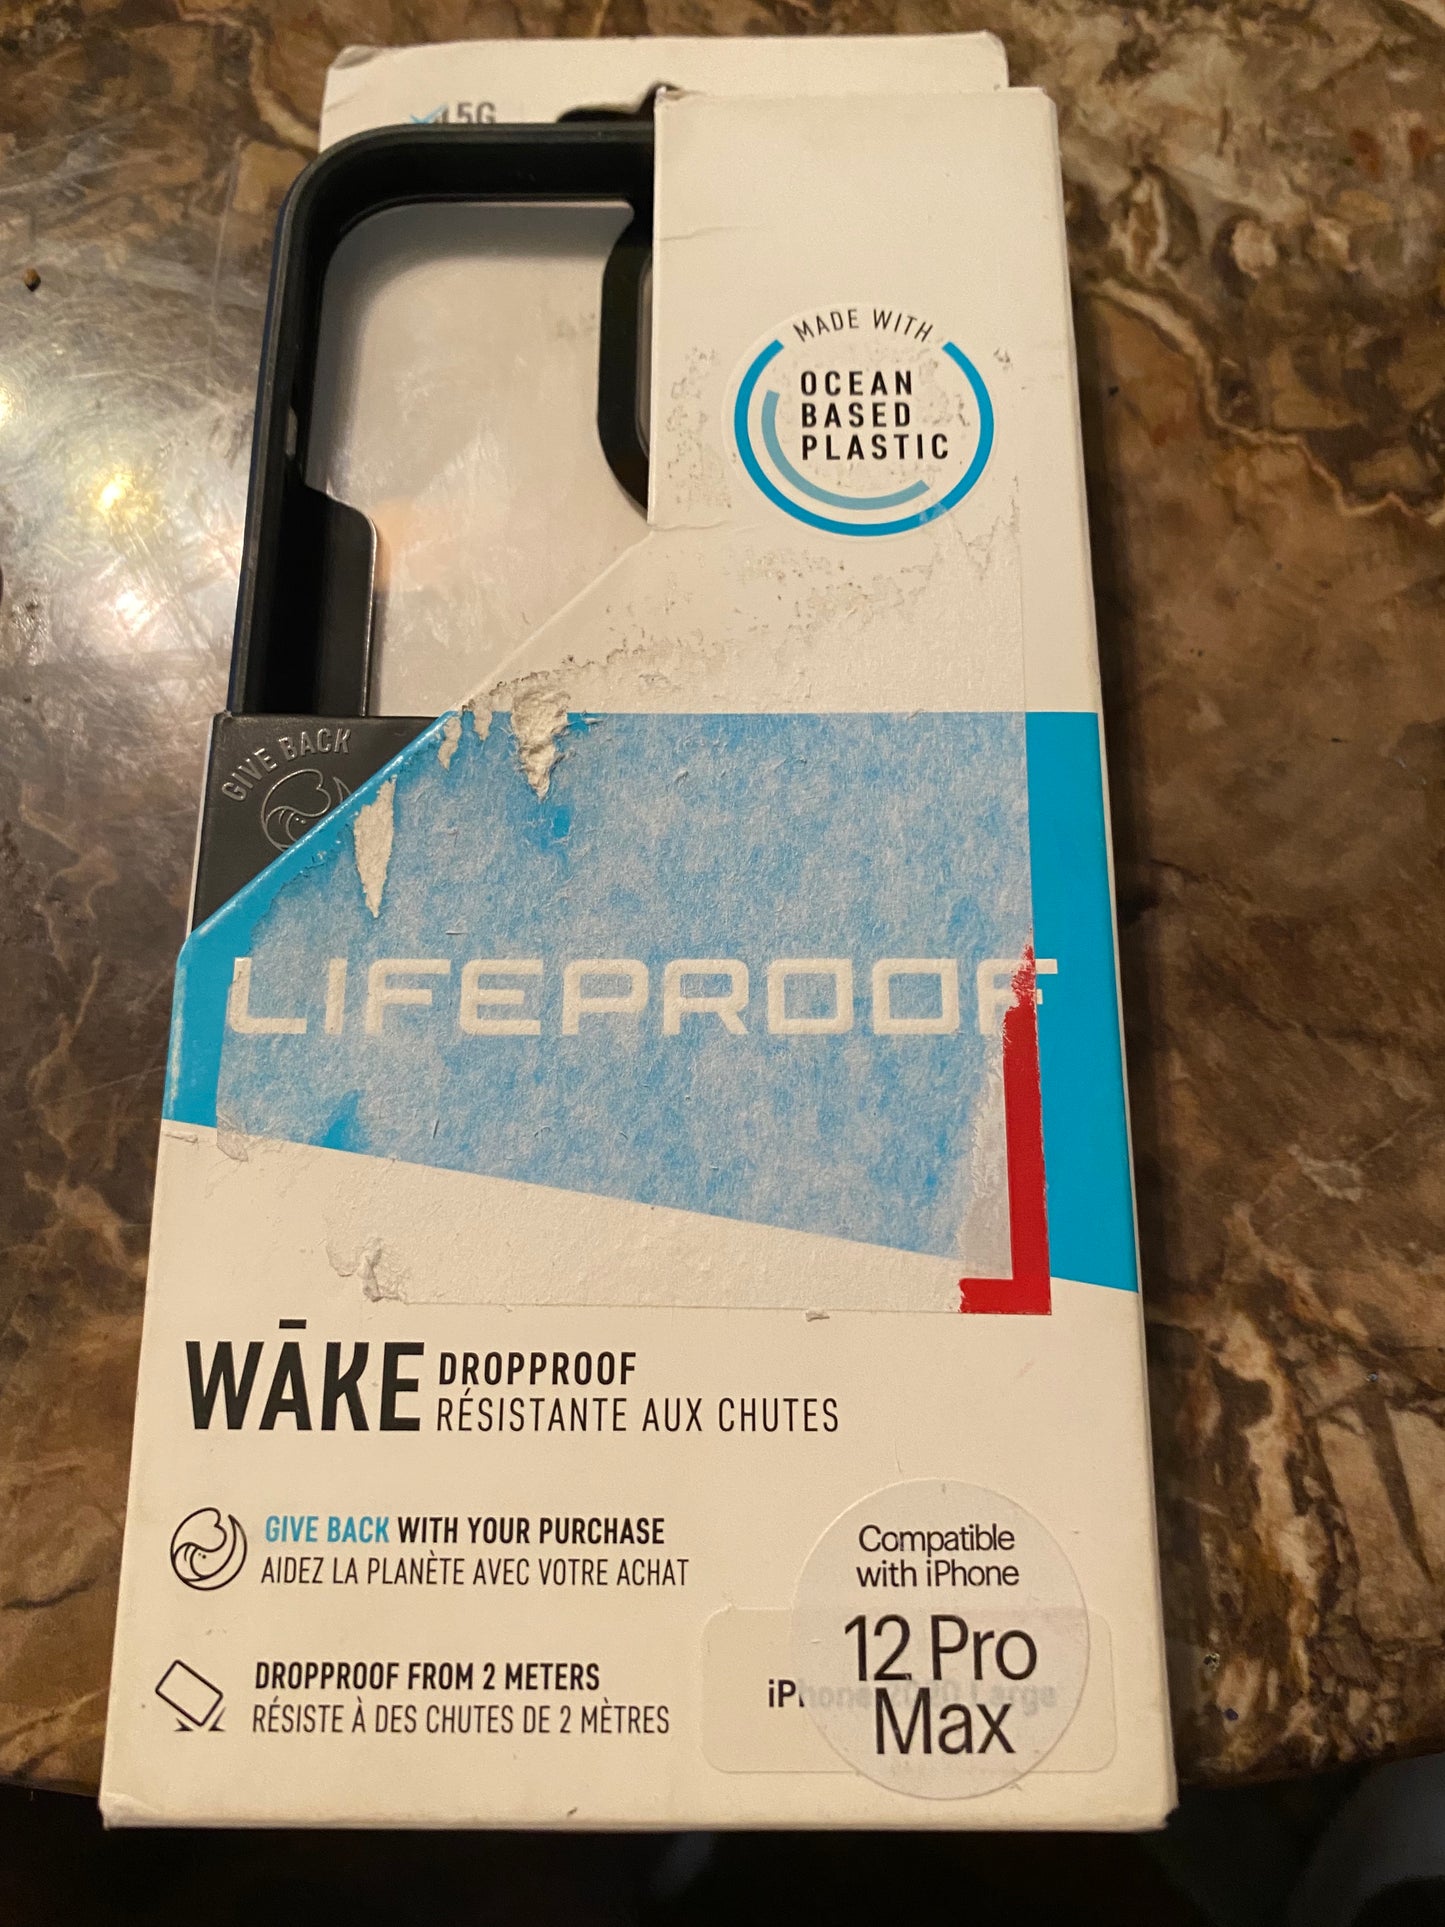 LifeProof Smartphone Cases